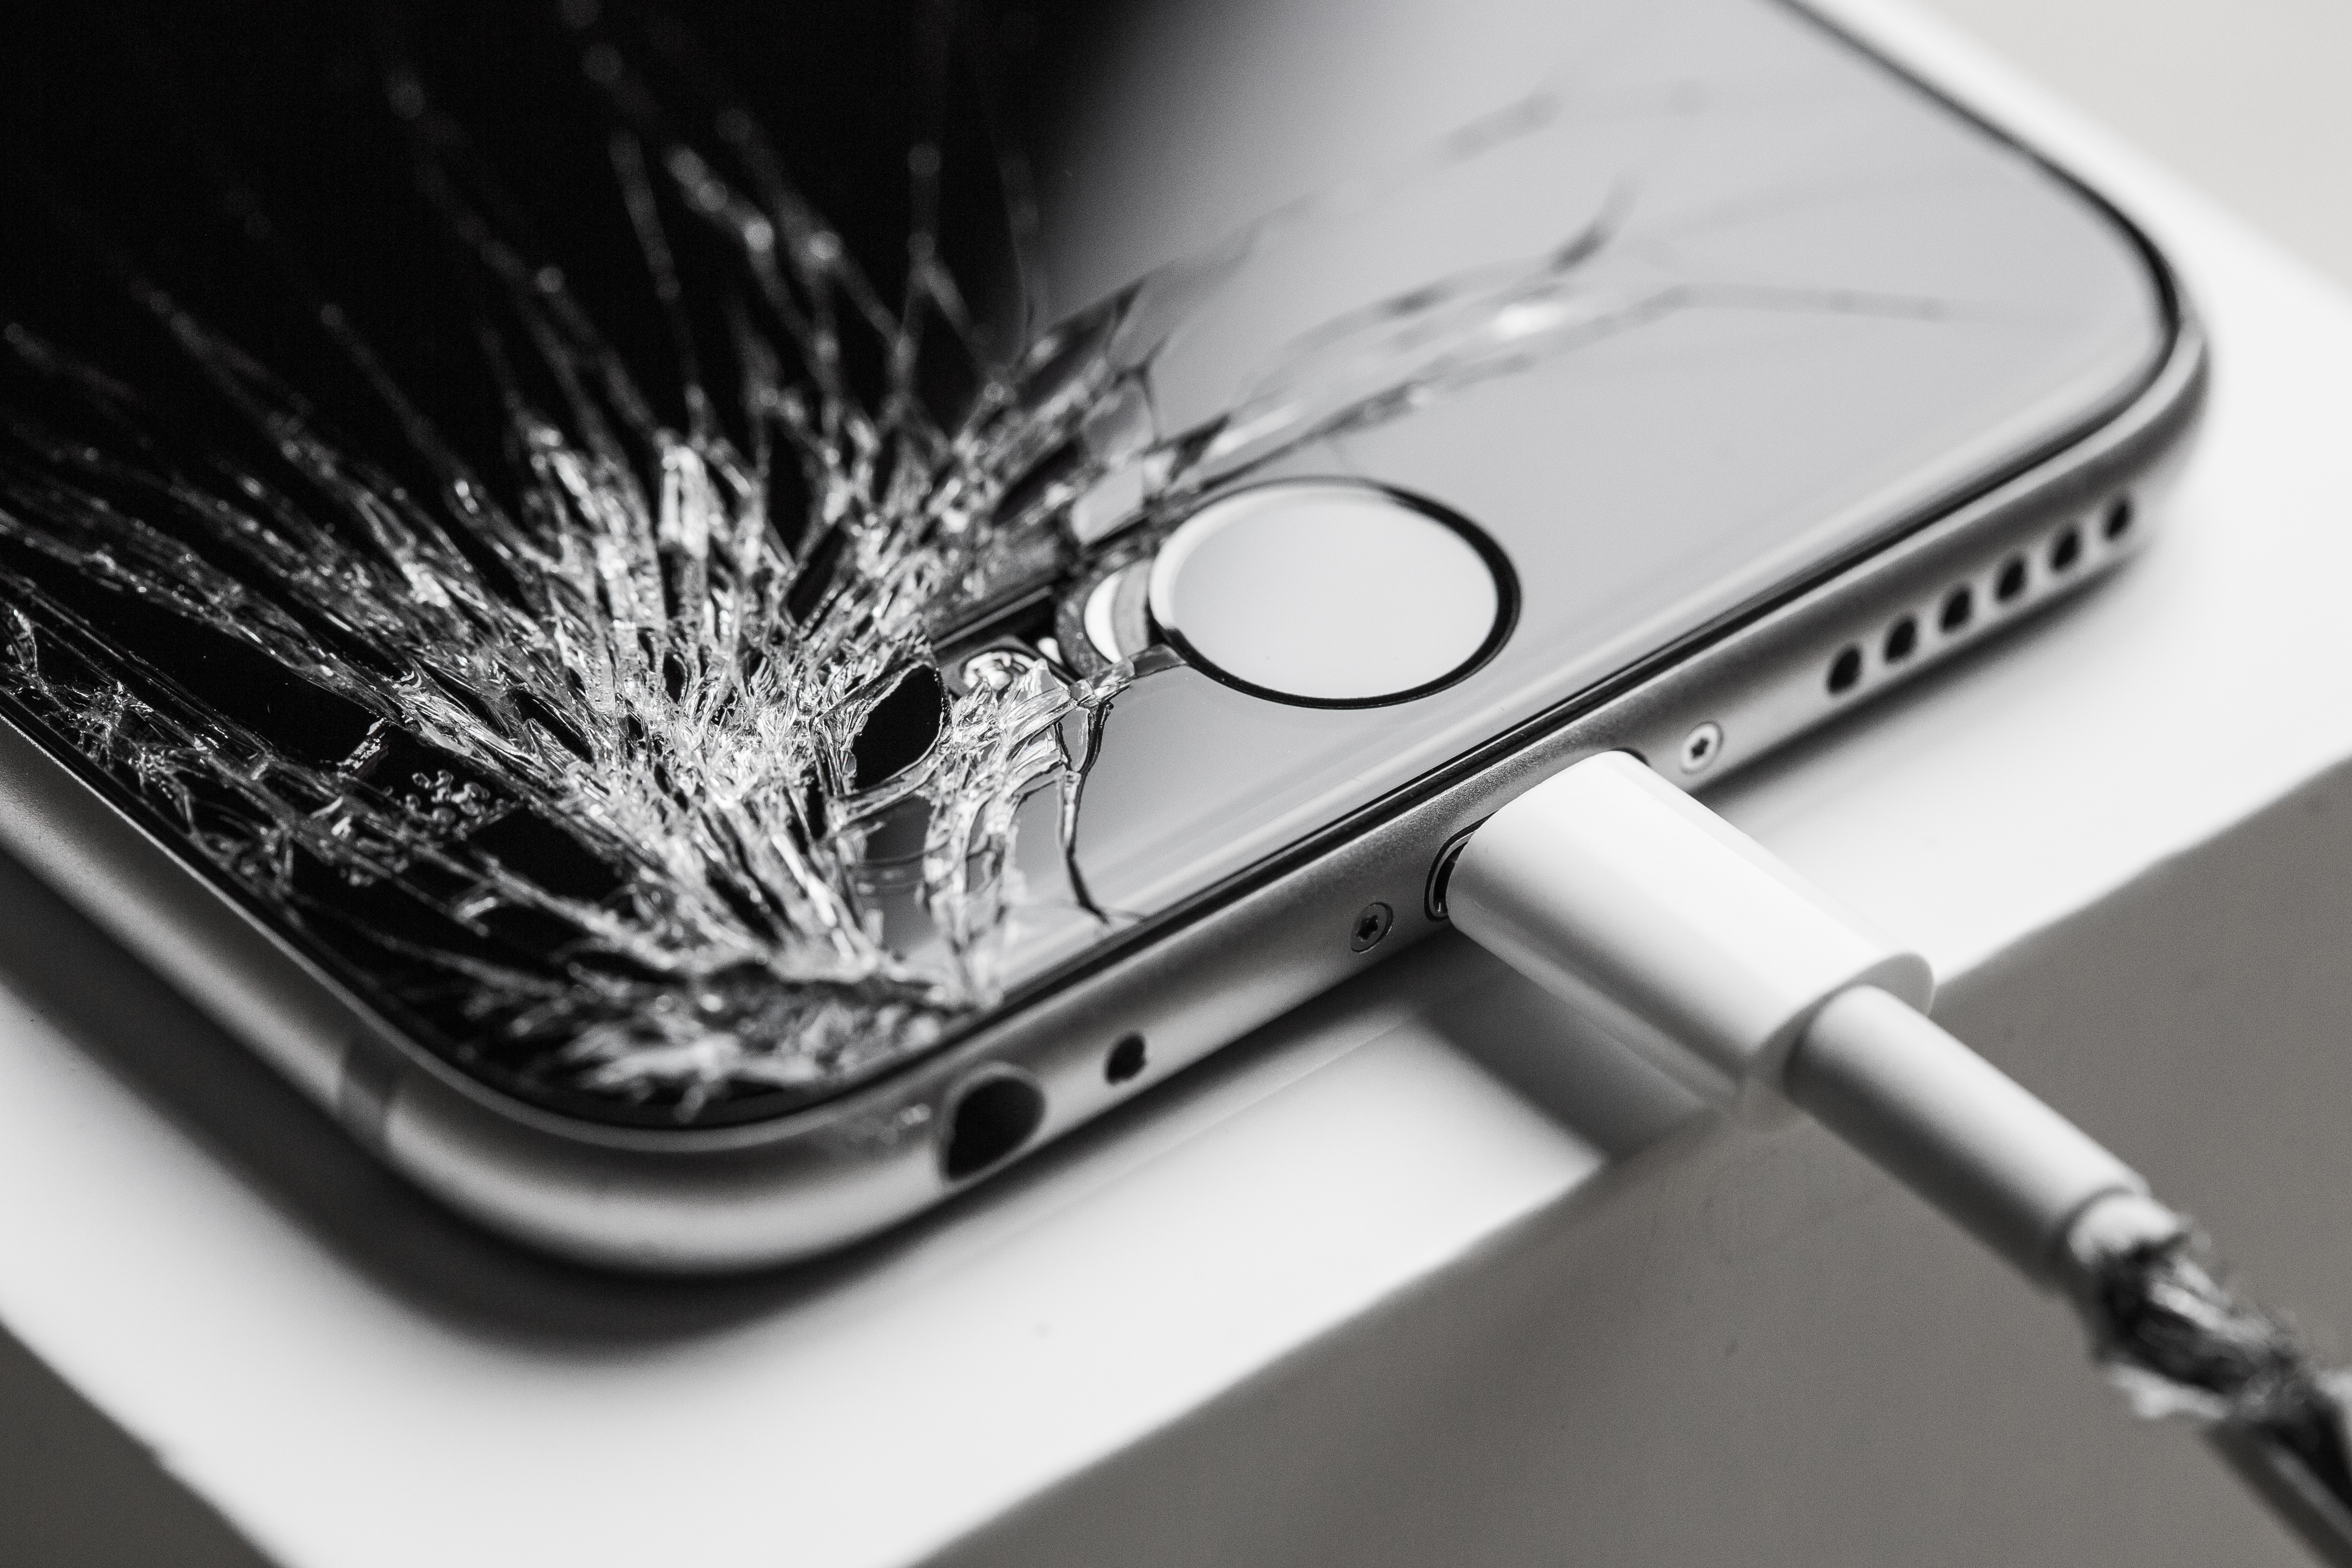 Crashed iPhone 6 with Cracked Screen Display Free Stock Photo | picjumbo